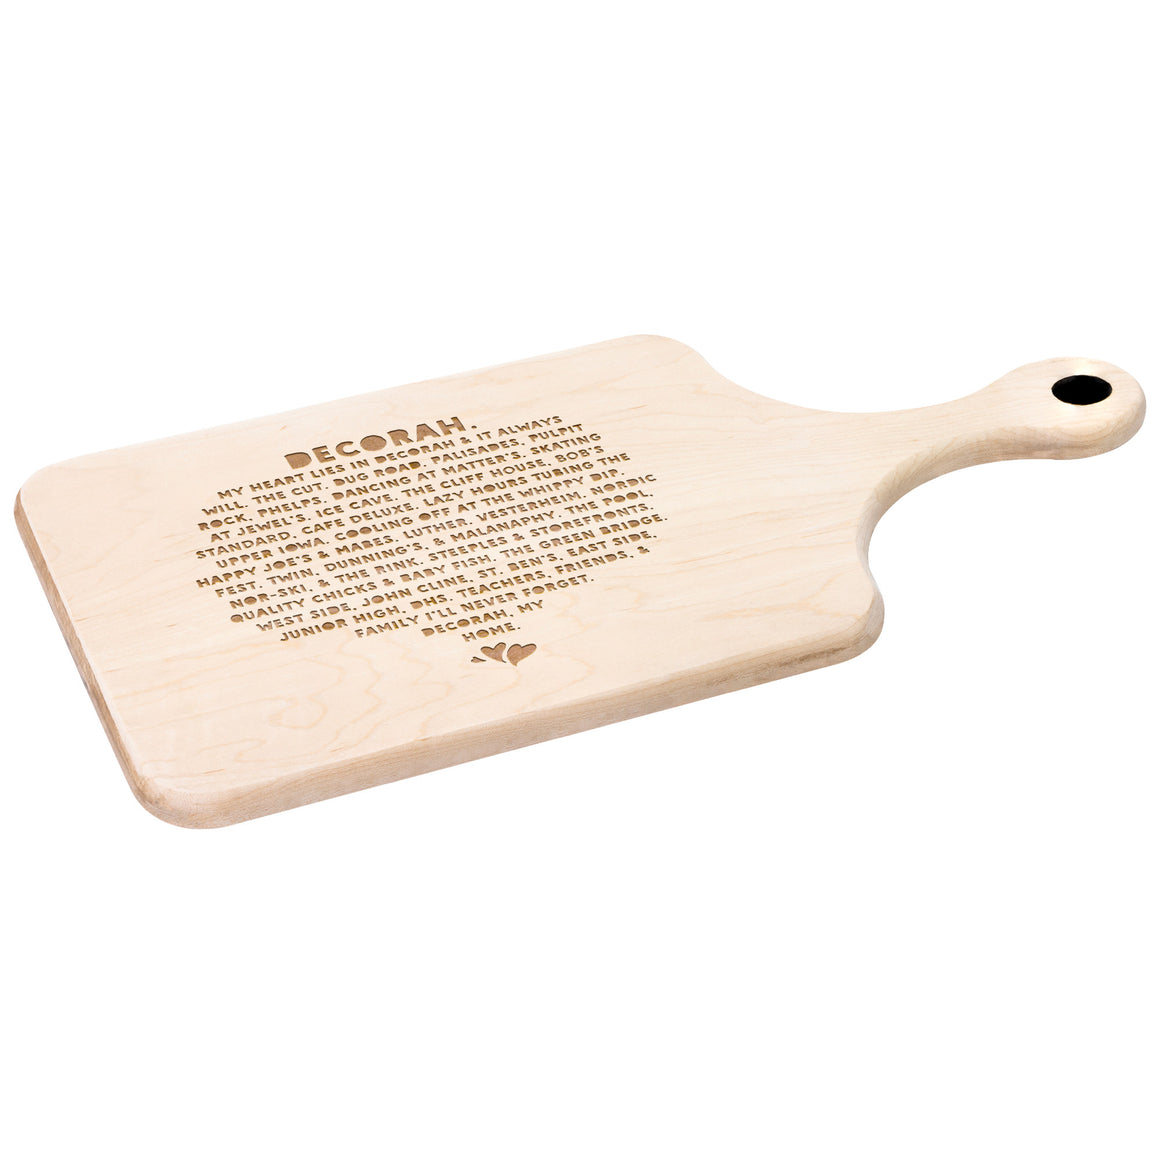 Decorah Cutting Board with Handle, Heart Lies in Decorah, Maple